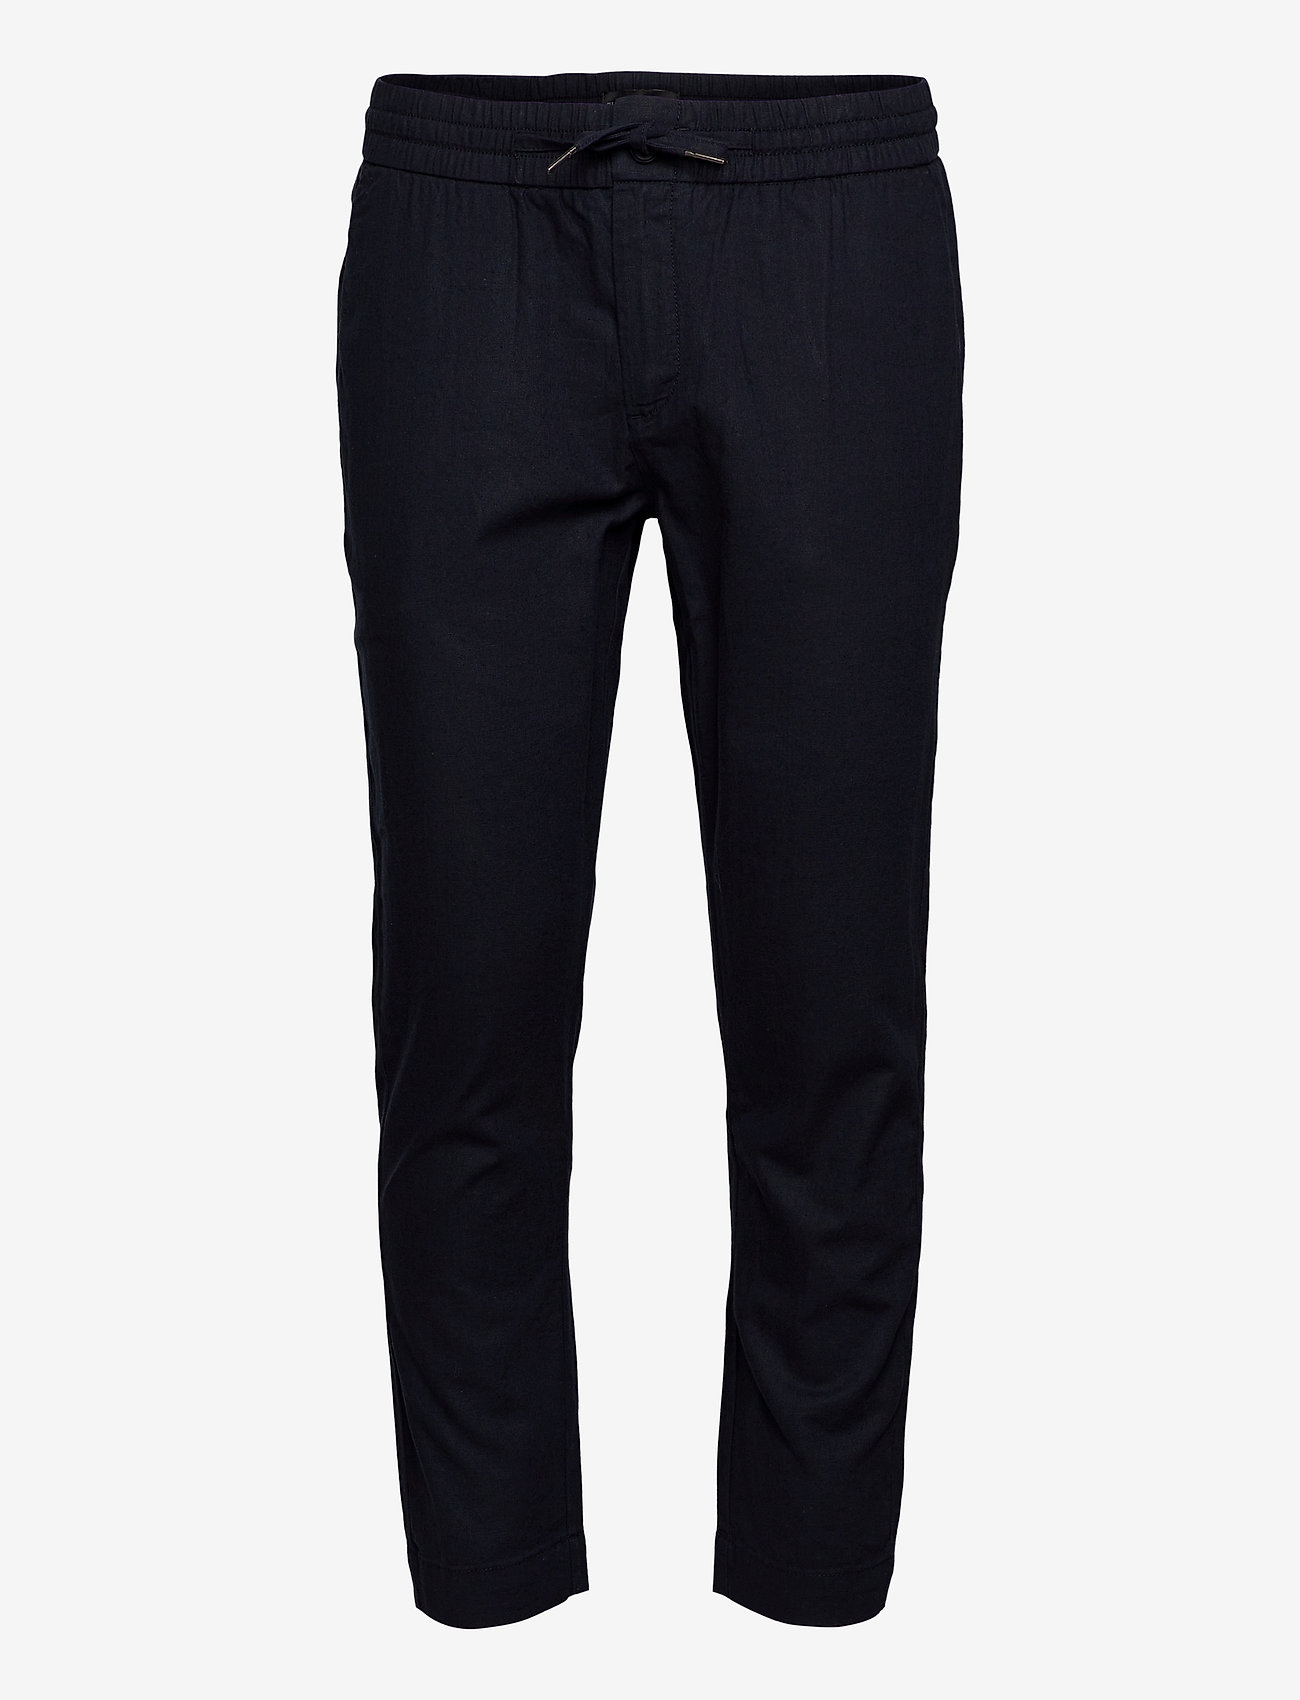 Clean Cut Copenhagen - Barcelona Cotton / Linen Pants - linen trousers - navy - 0